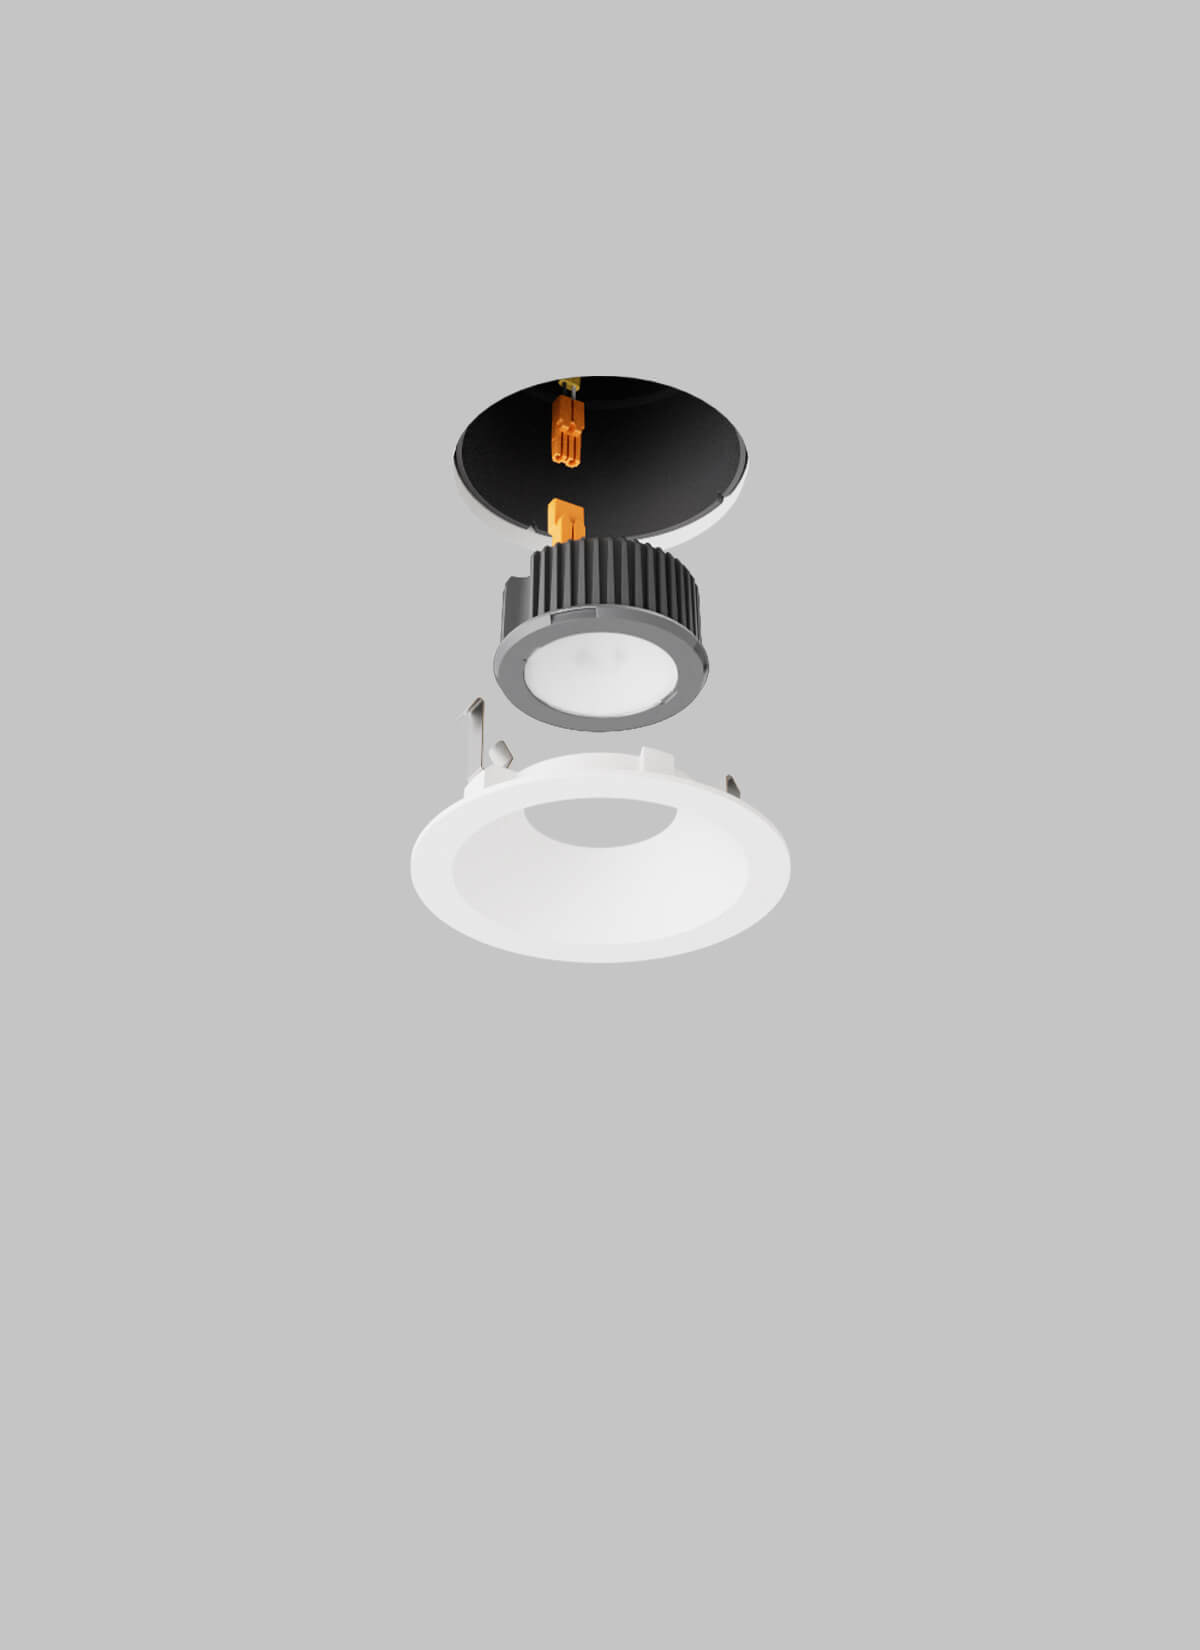 LUSA retrofit recessed light with round white trim